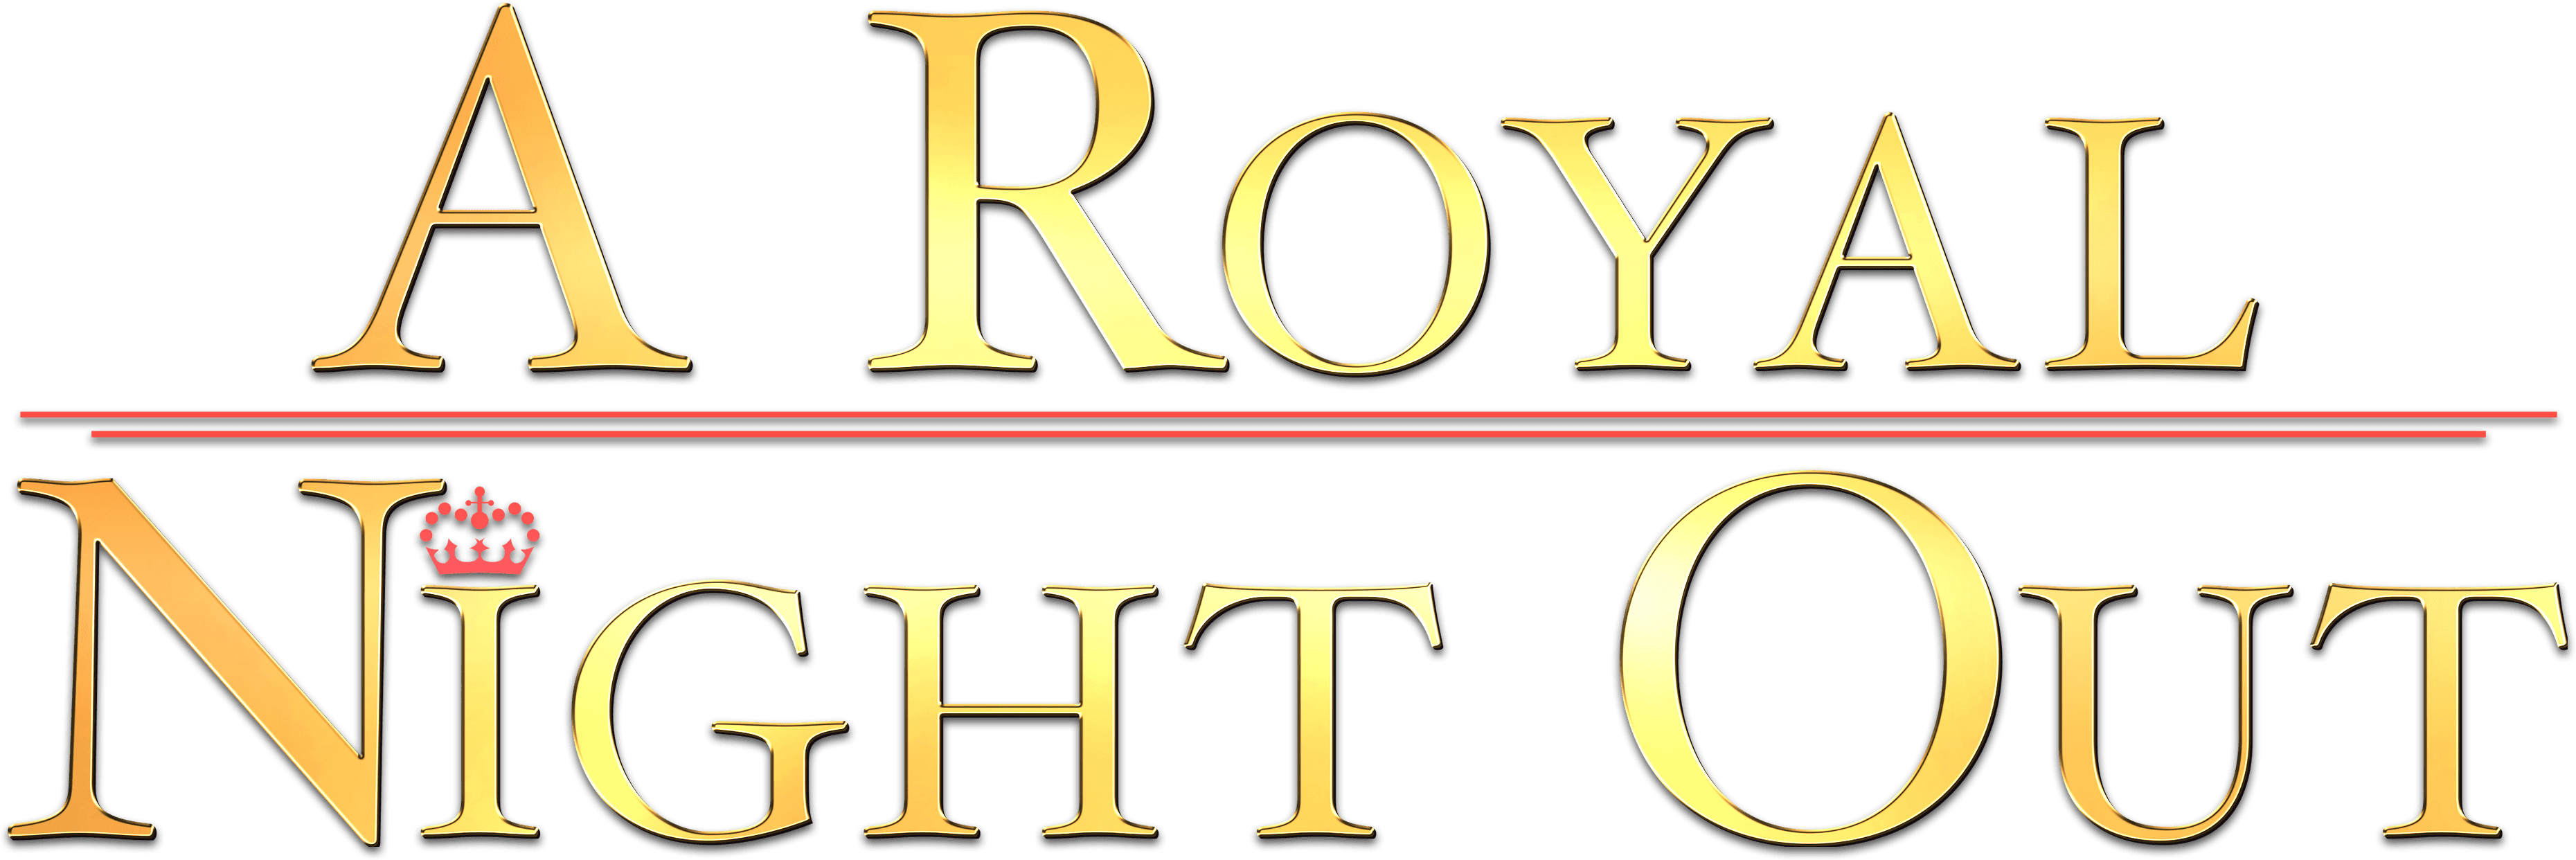 A Royal Night Out logo